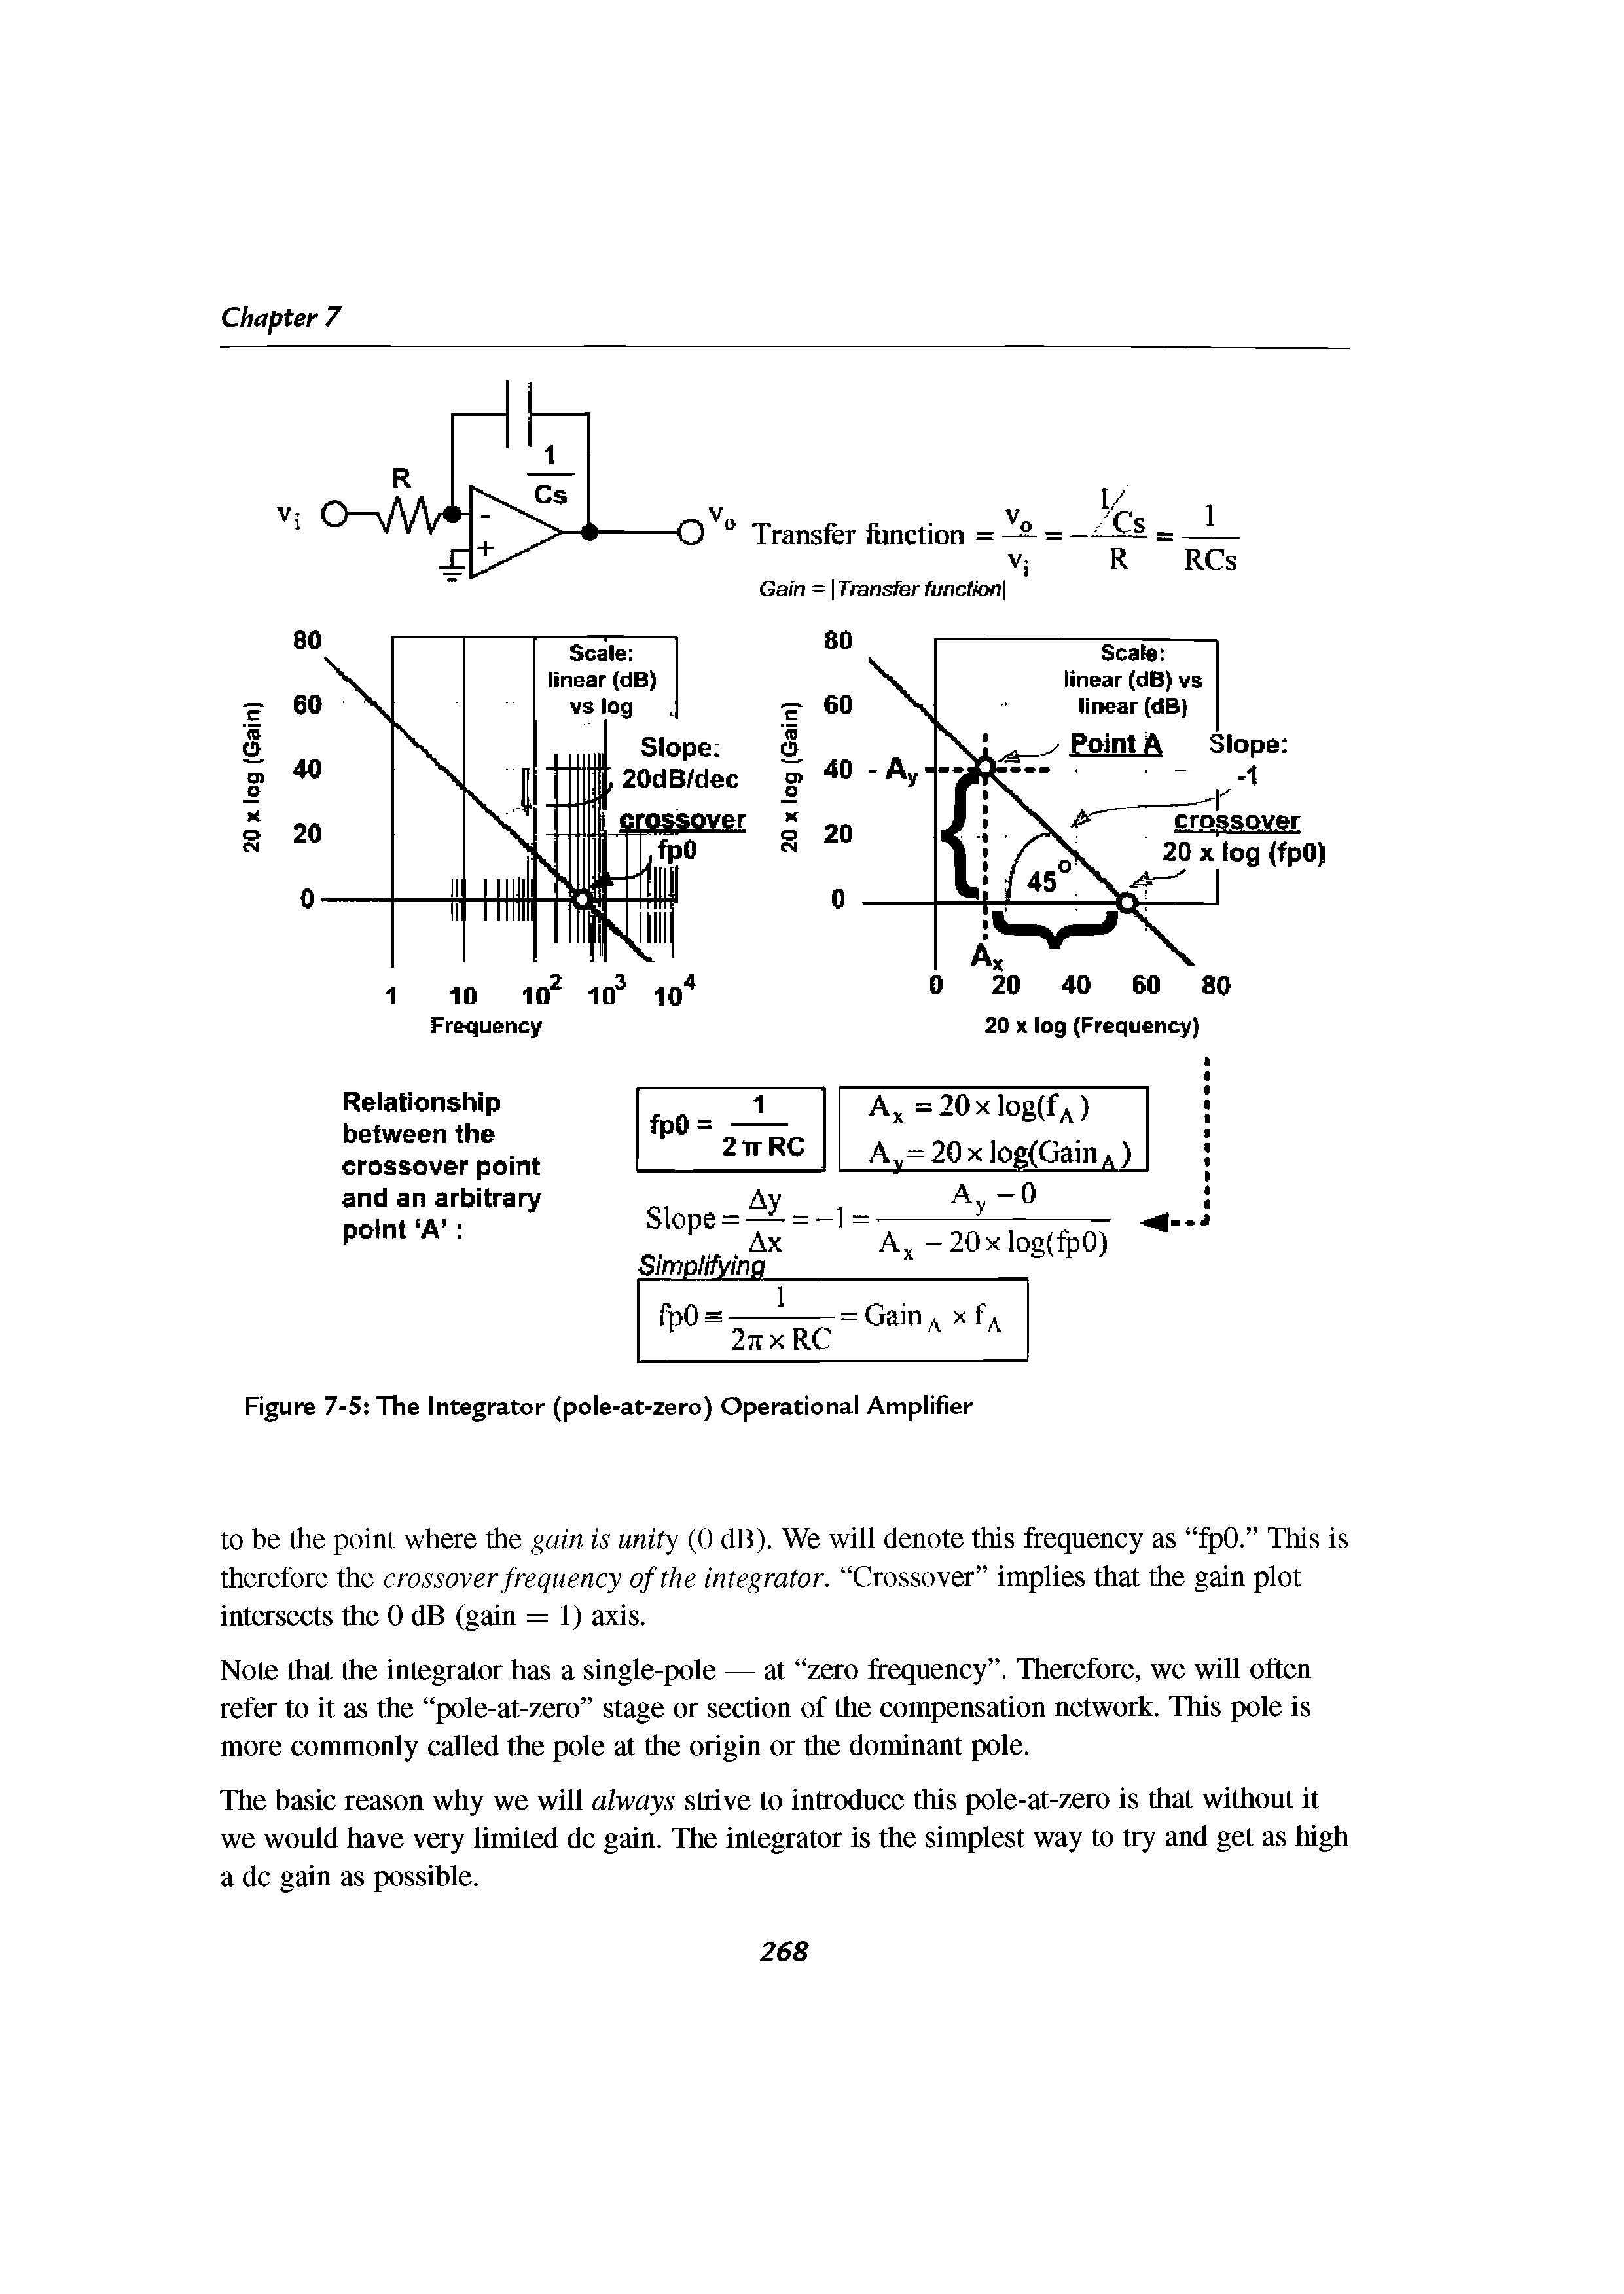 Figure 7-5 The Integrator (pole-at-zero) Operational Amplifier...